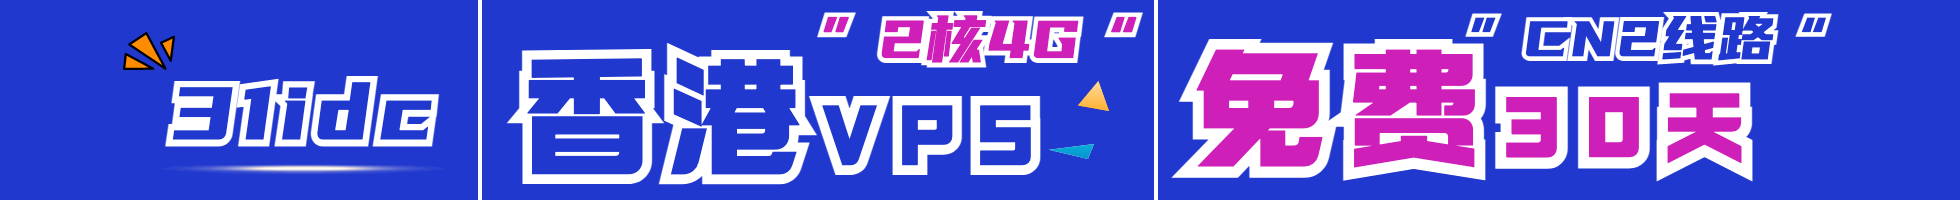 V.PS，国外特价VPS特价新品上线@Mini Pro Max系列，中国香港/美国/日本/德国等，KVM虚拟/500Mbps带宽